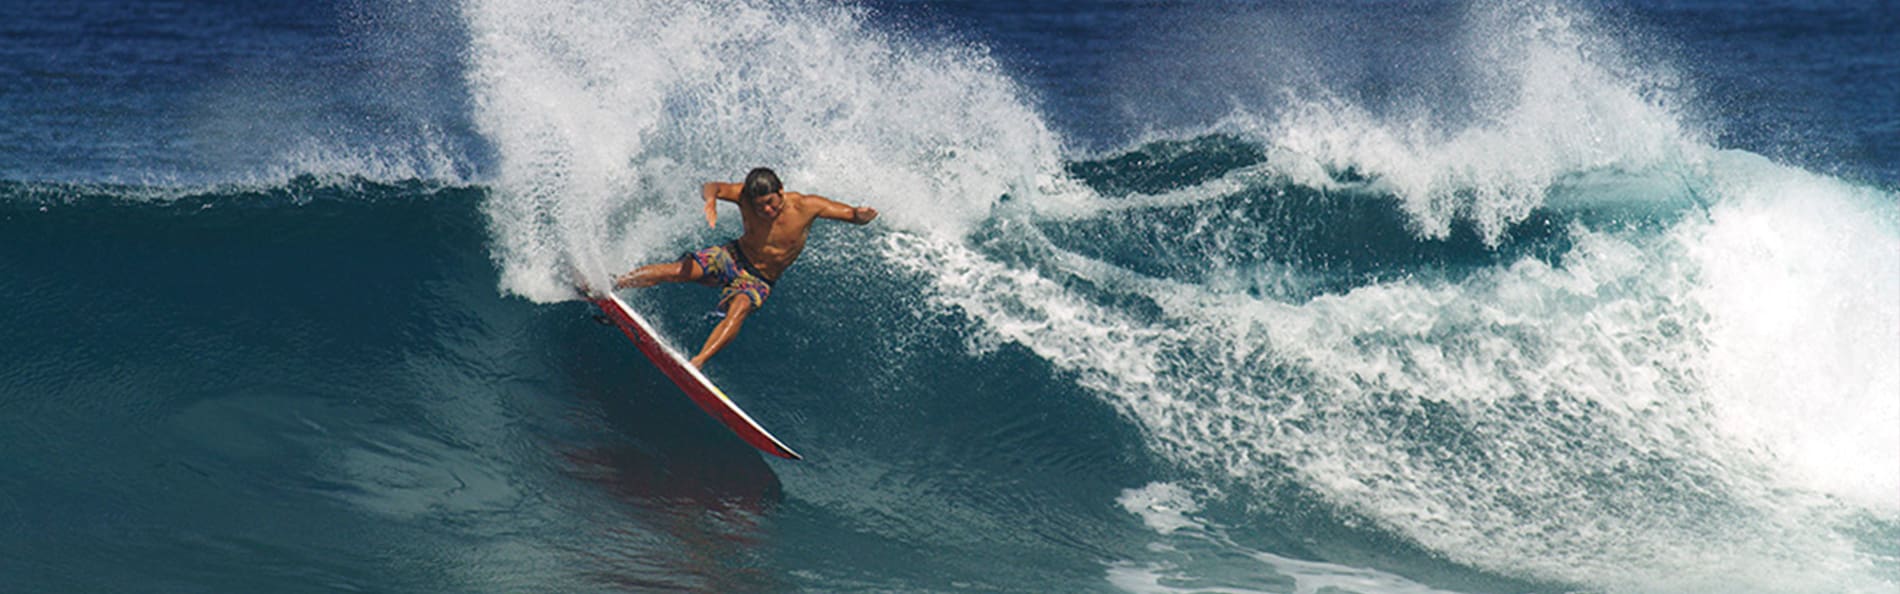 Surfer Surfing on a wave - watch banner